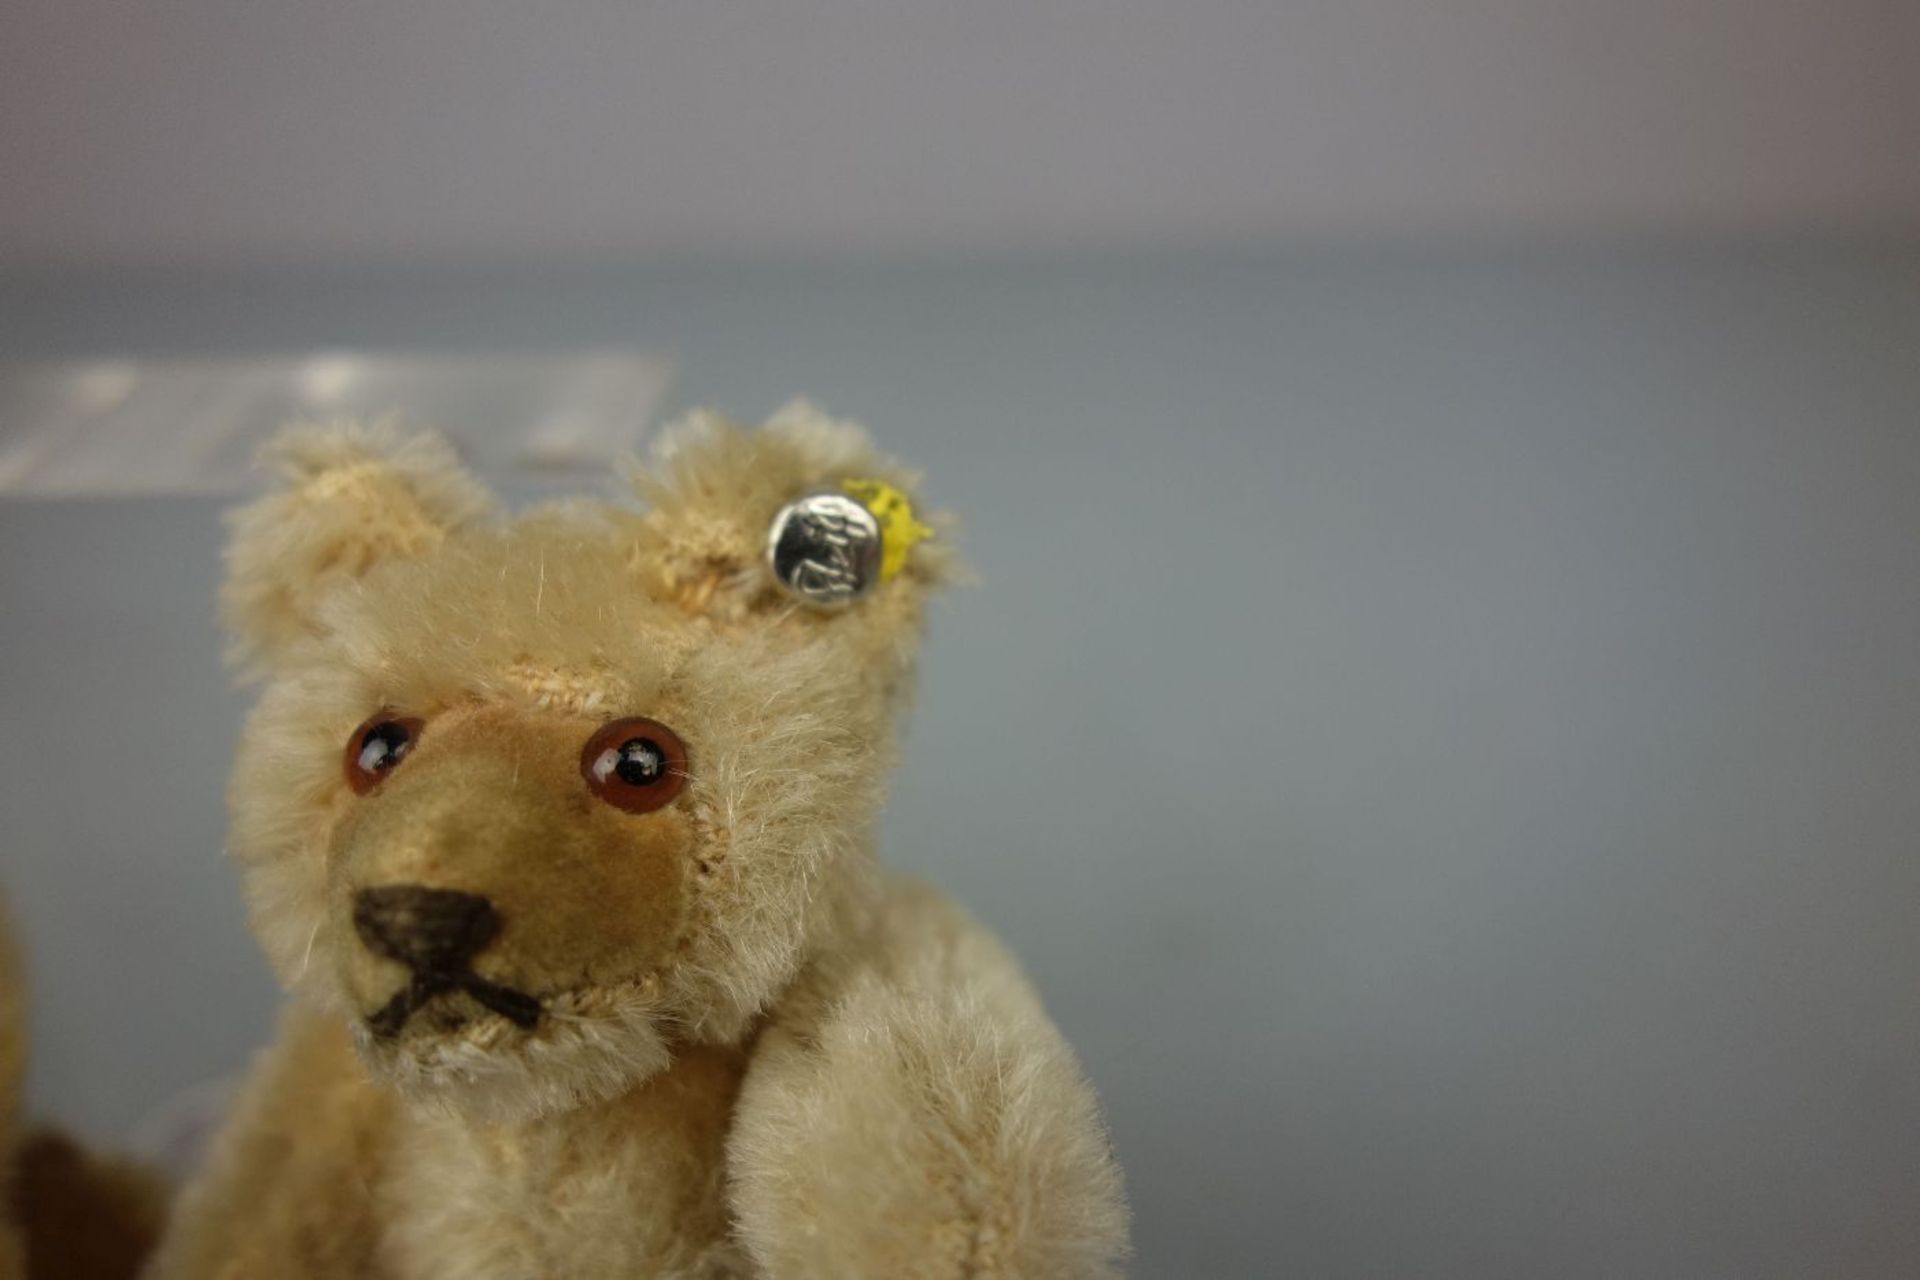 PLÜSCHTIERE / TEDDYBÄREN: Konvolut Miniatur Teddys / Bären - 6 Stück / six teddy bears, 20. Jh., - Bild 5 aus 8